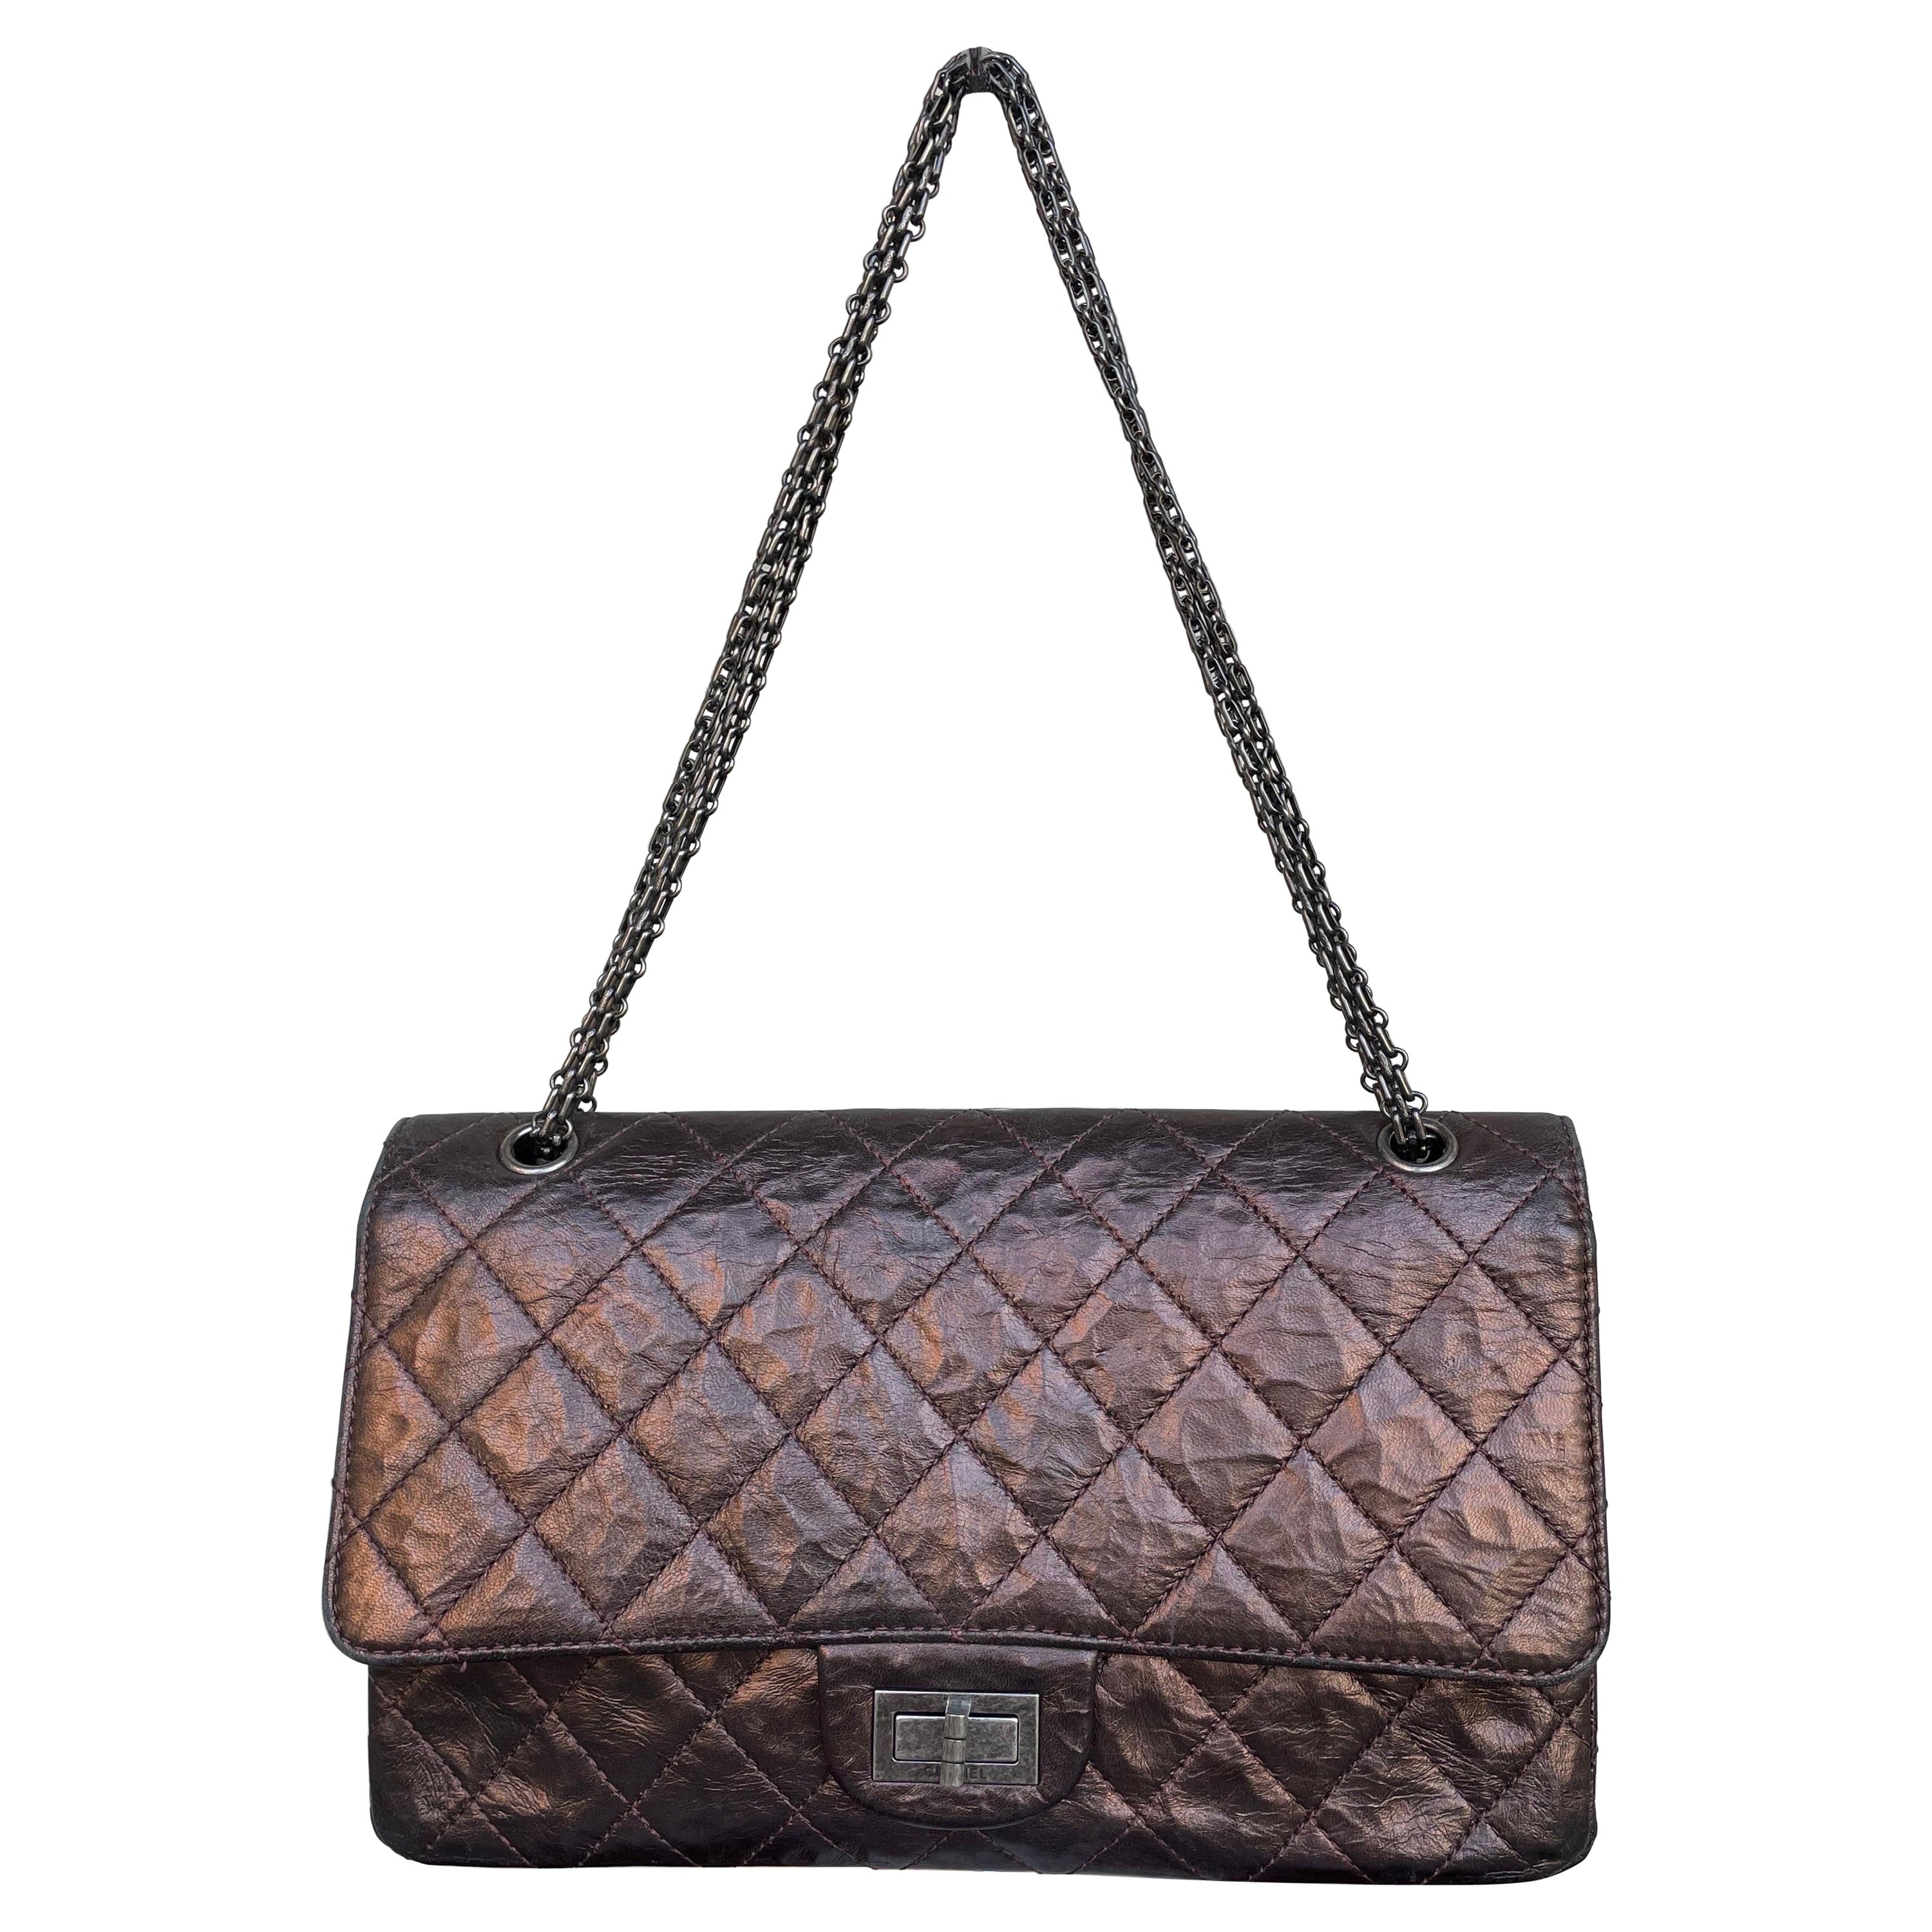 Chanel 2.55 Reissue bronze bag